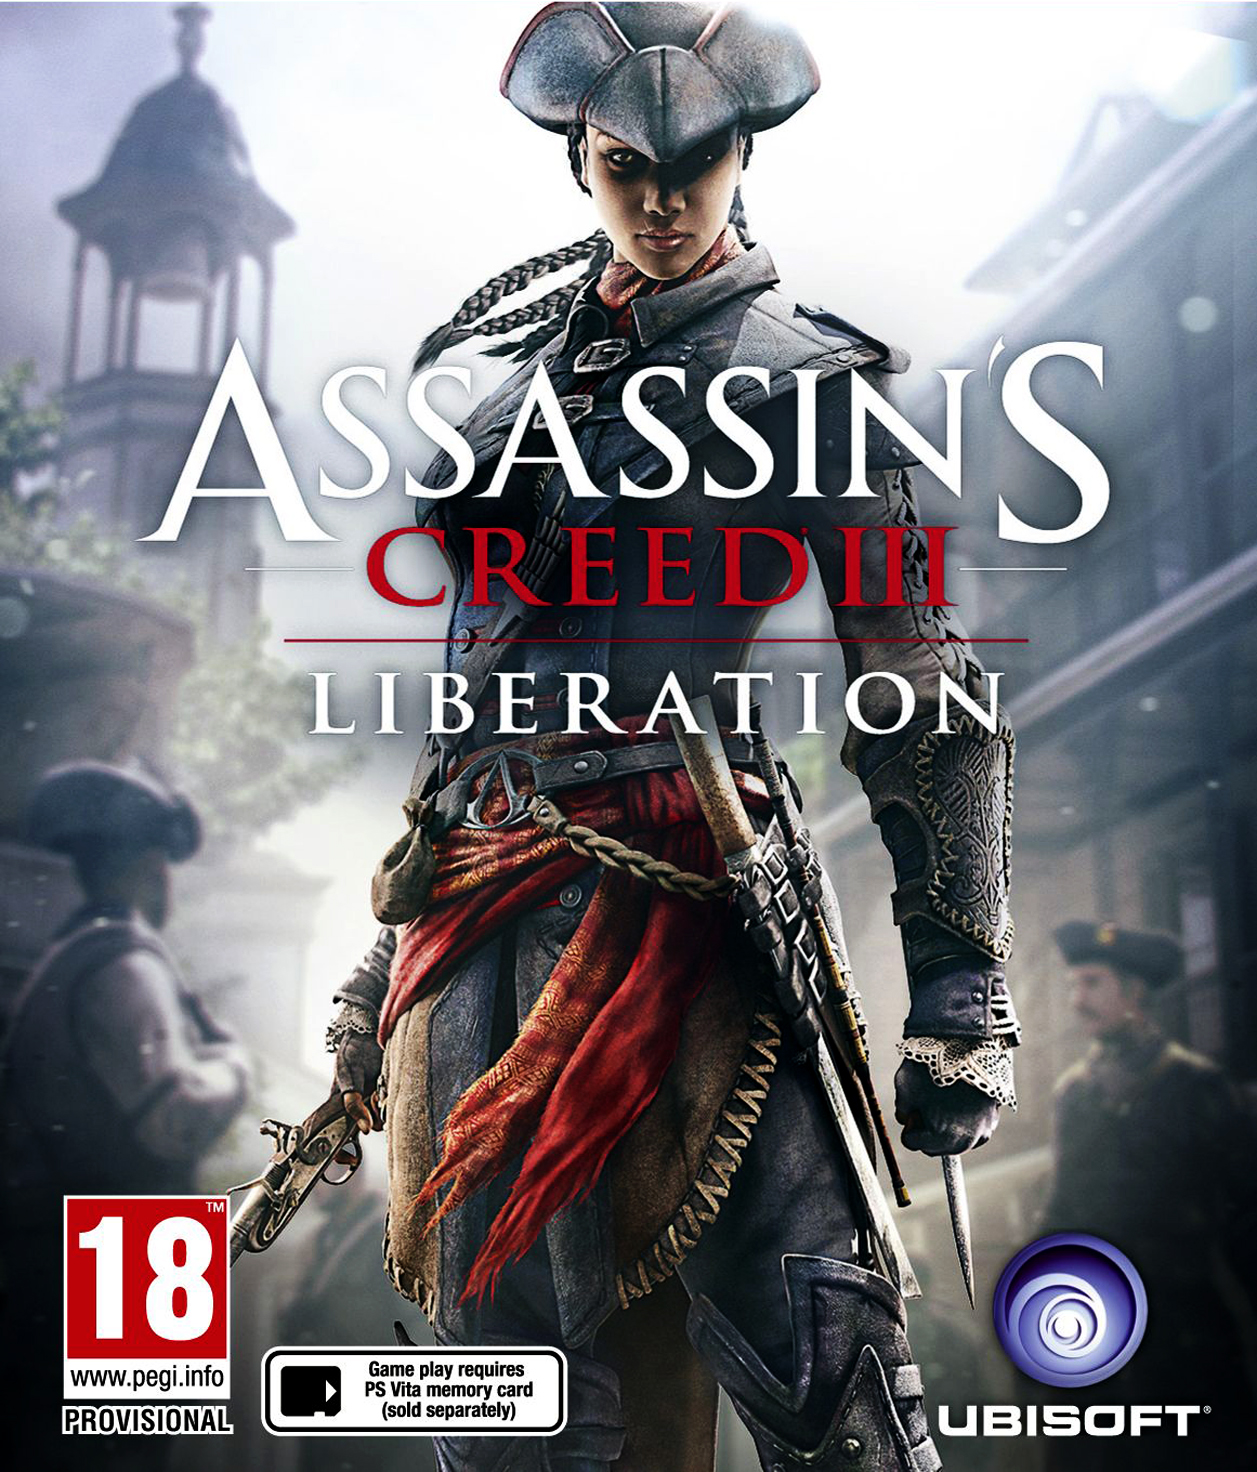 Assassin's Creed III: Liberation. Assassin's Creed